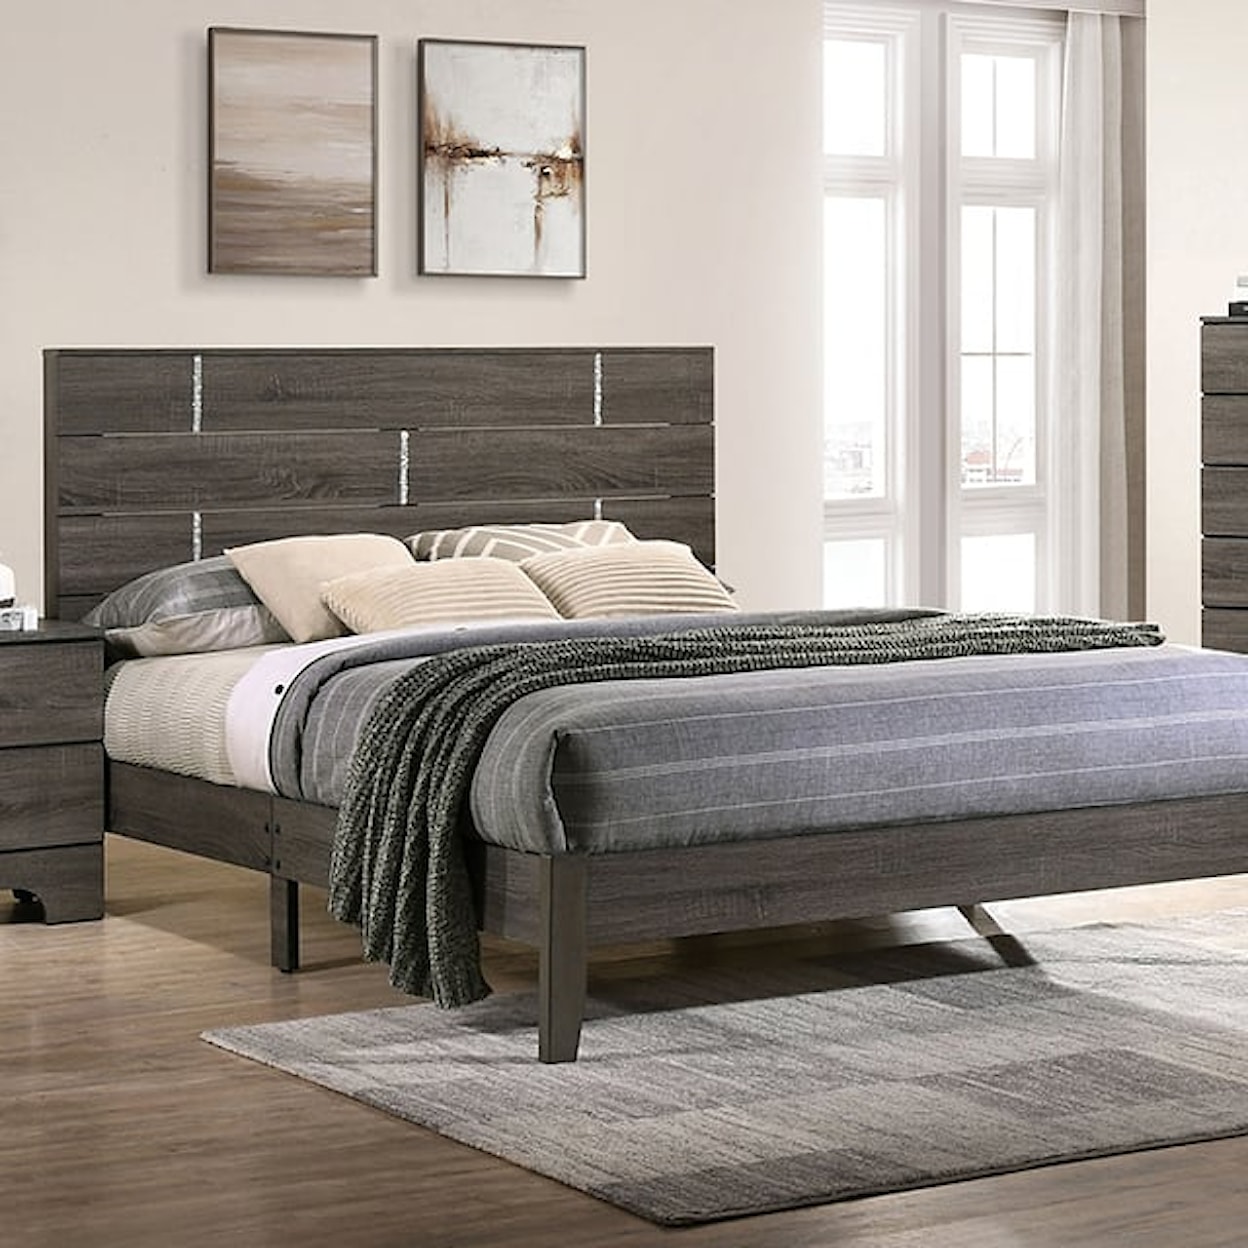 Furniture of America Richterswil Full Bed